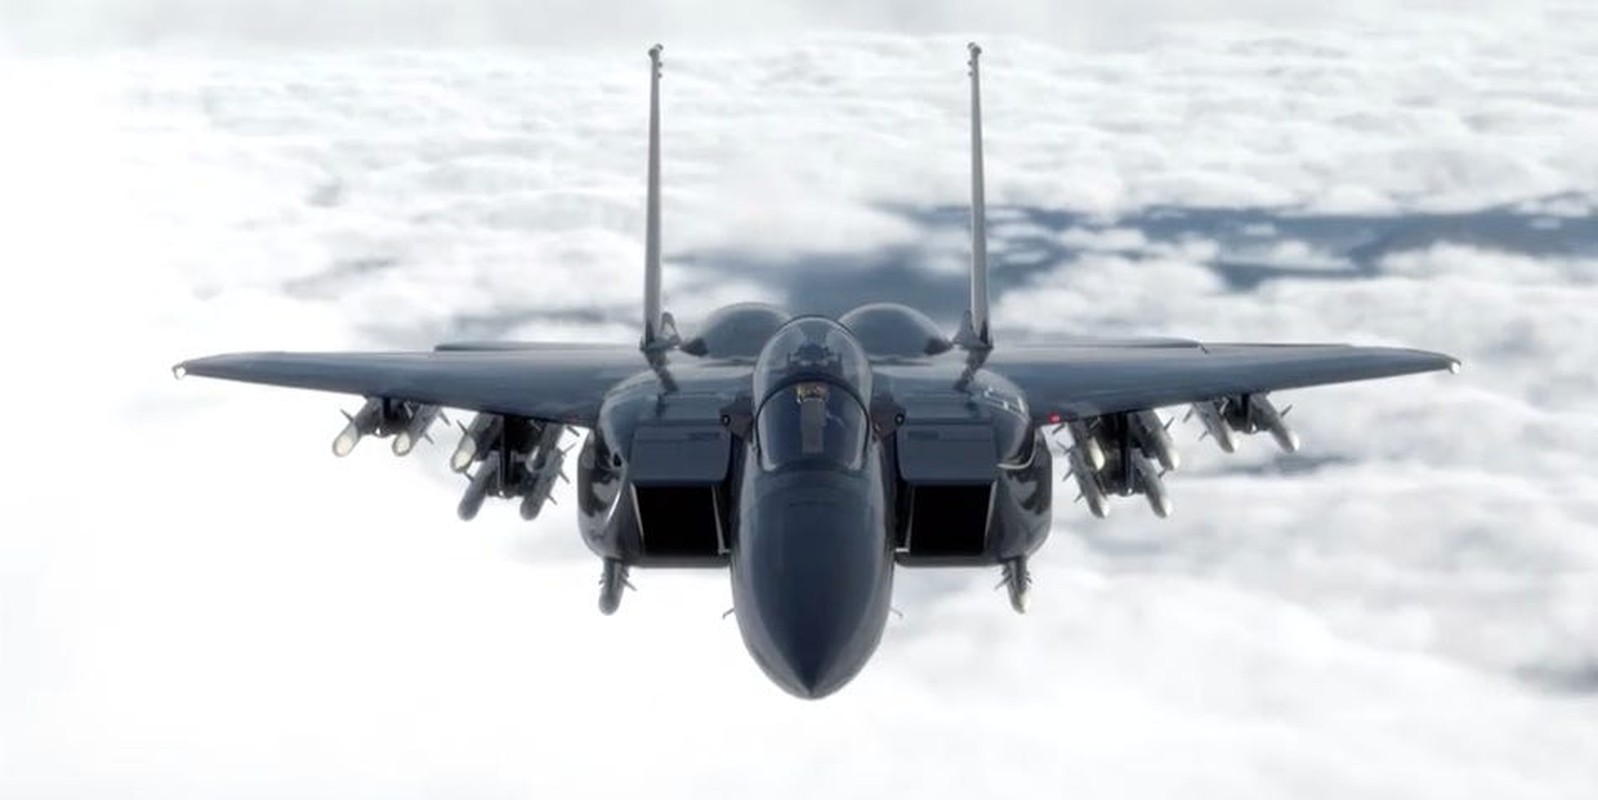 Neu An Do mua F-15EX, lieu co “dung hang” voi Su-30MKI?-Hinh-6